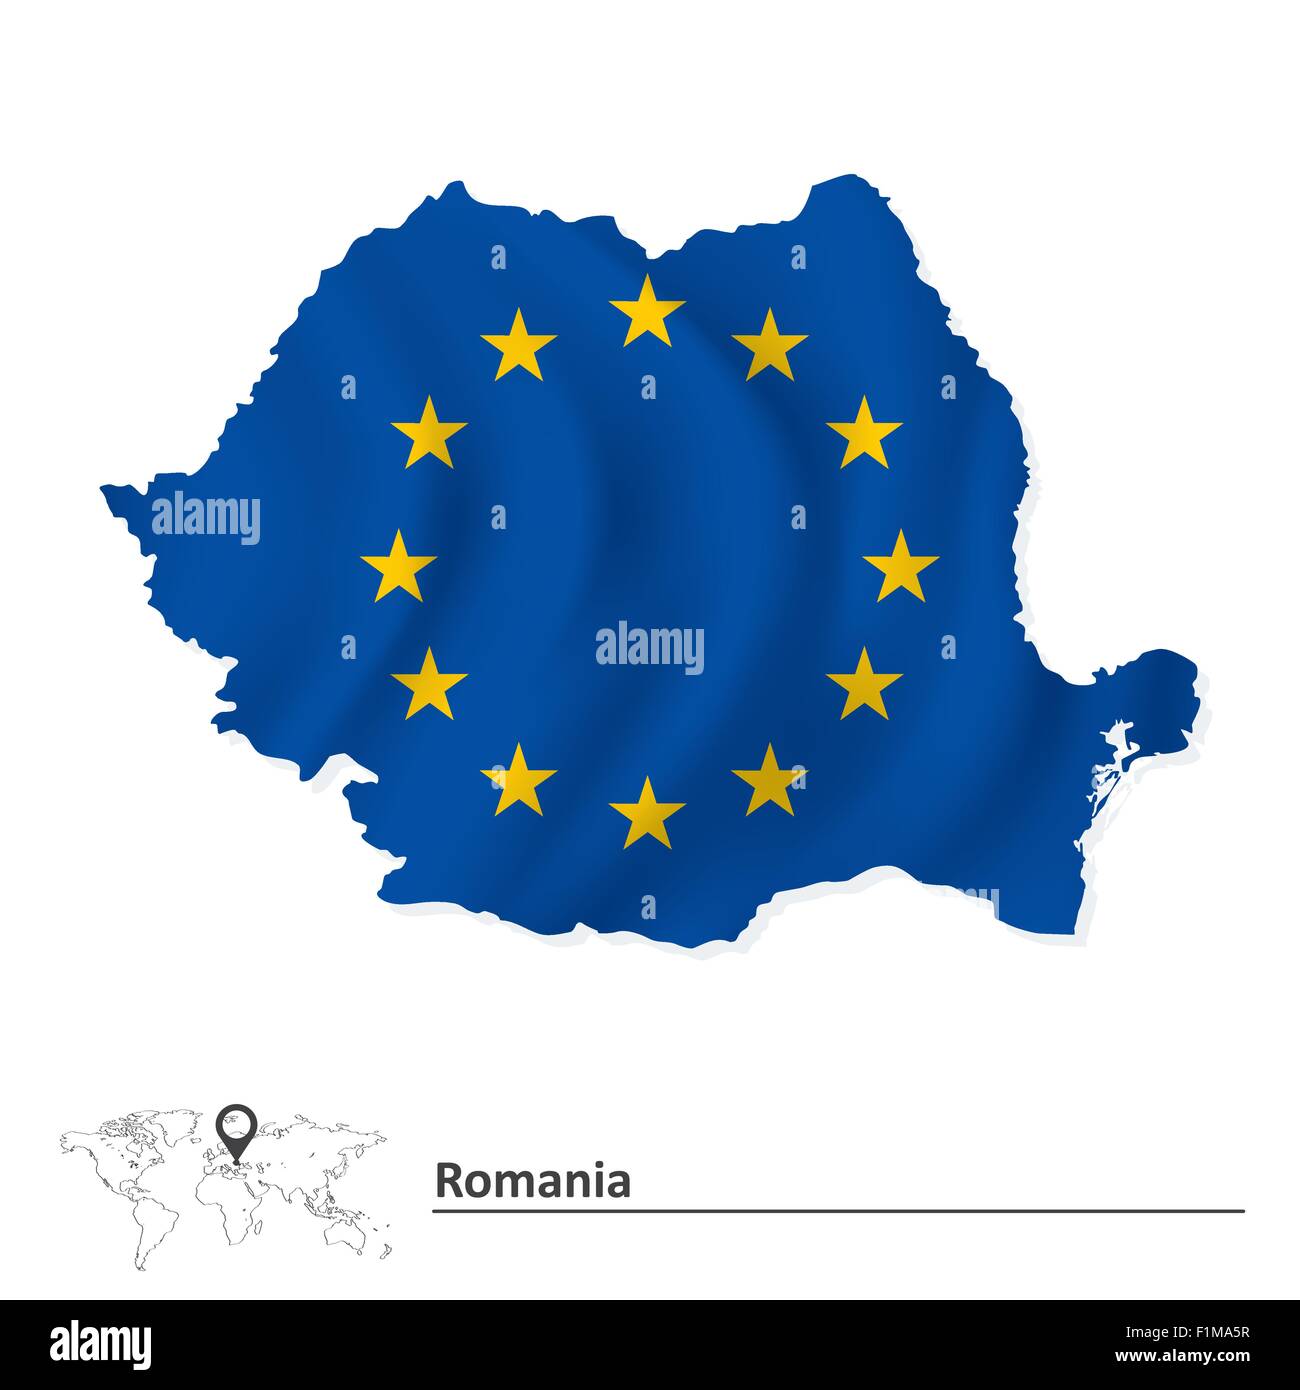 Karte von Rumänien mit EU-Flagge - Vektor-illustration Stock Vektor